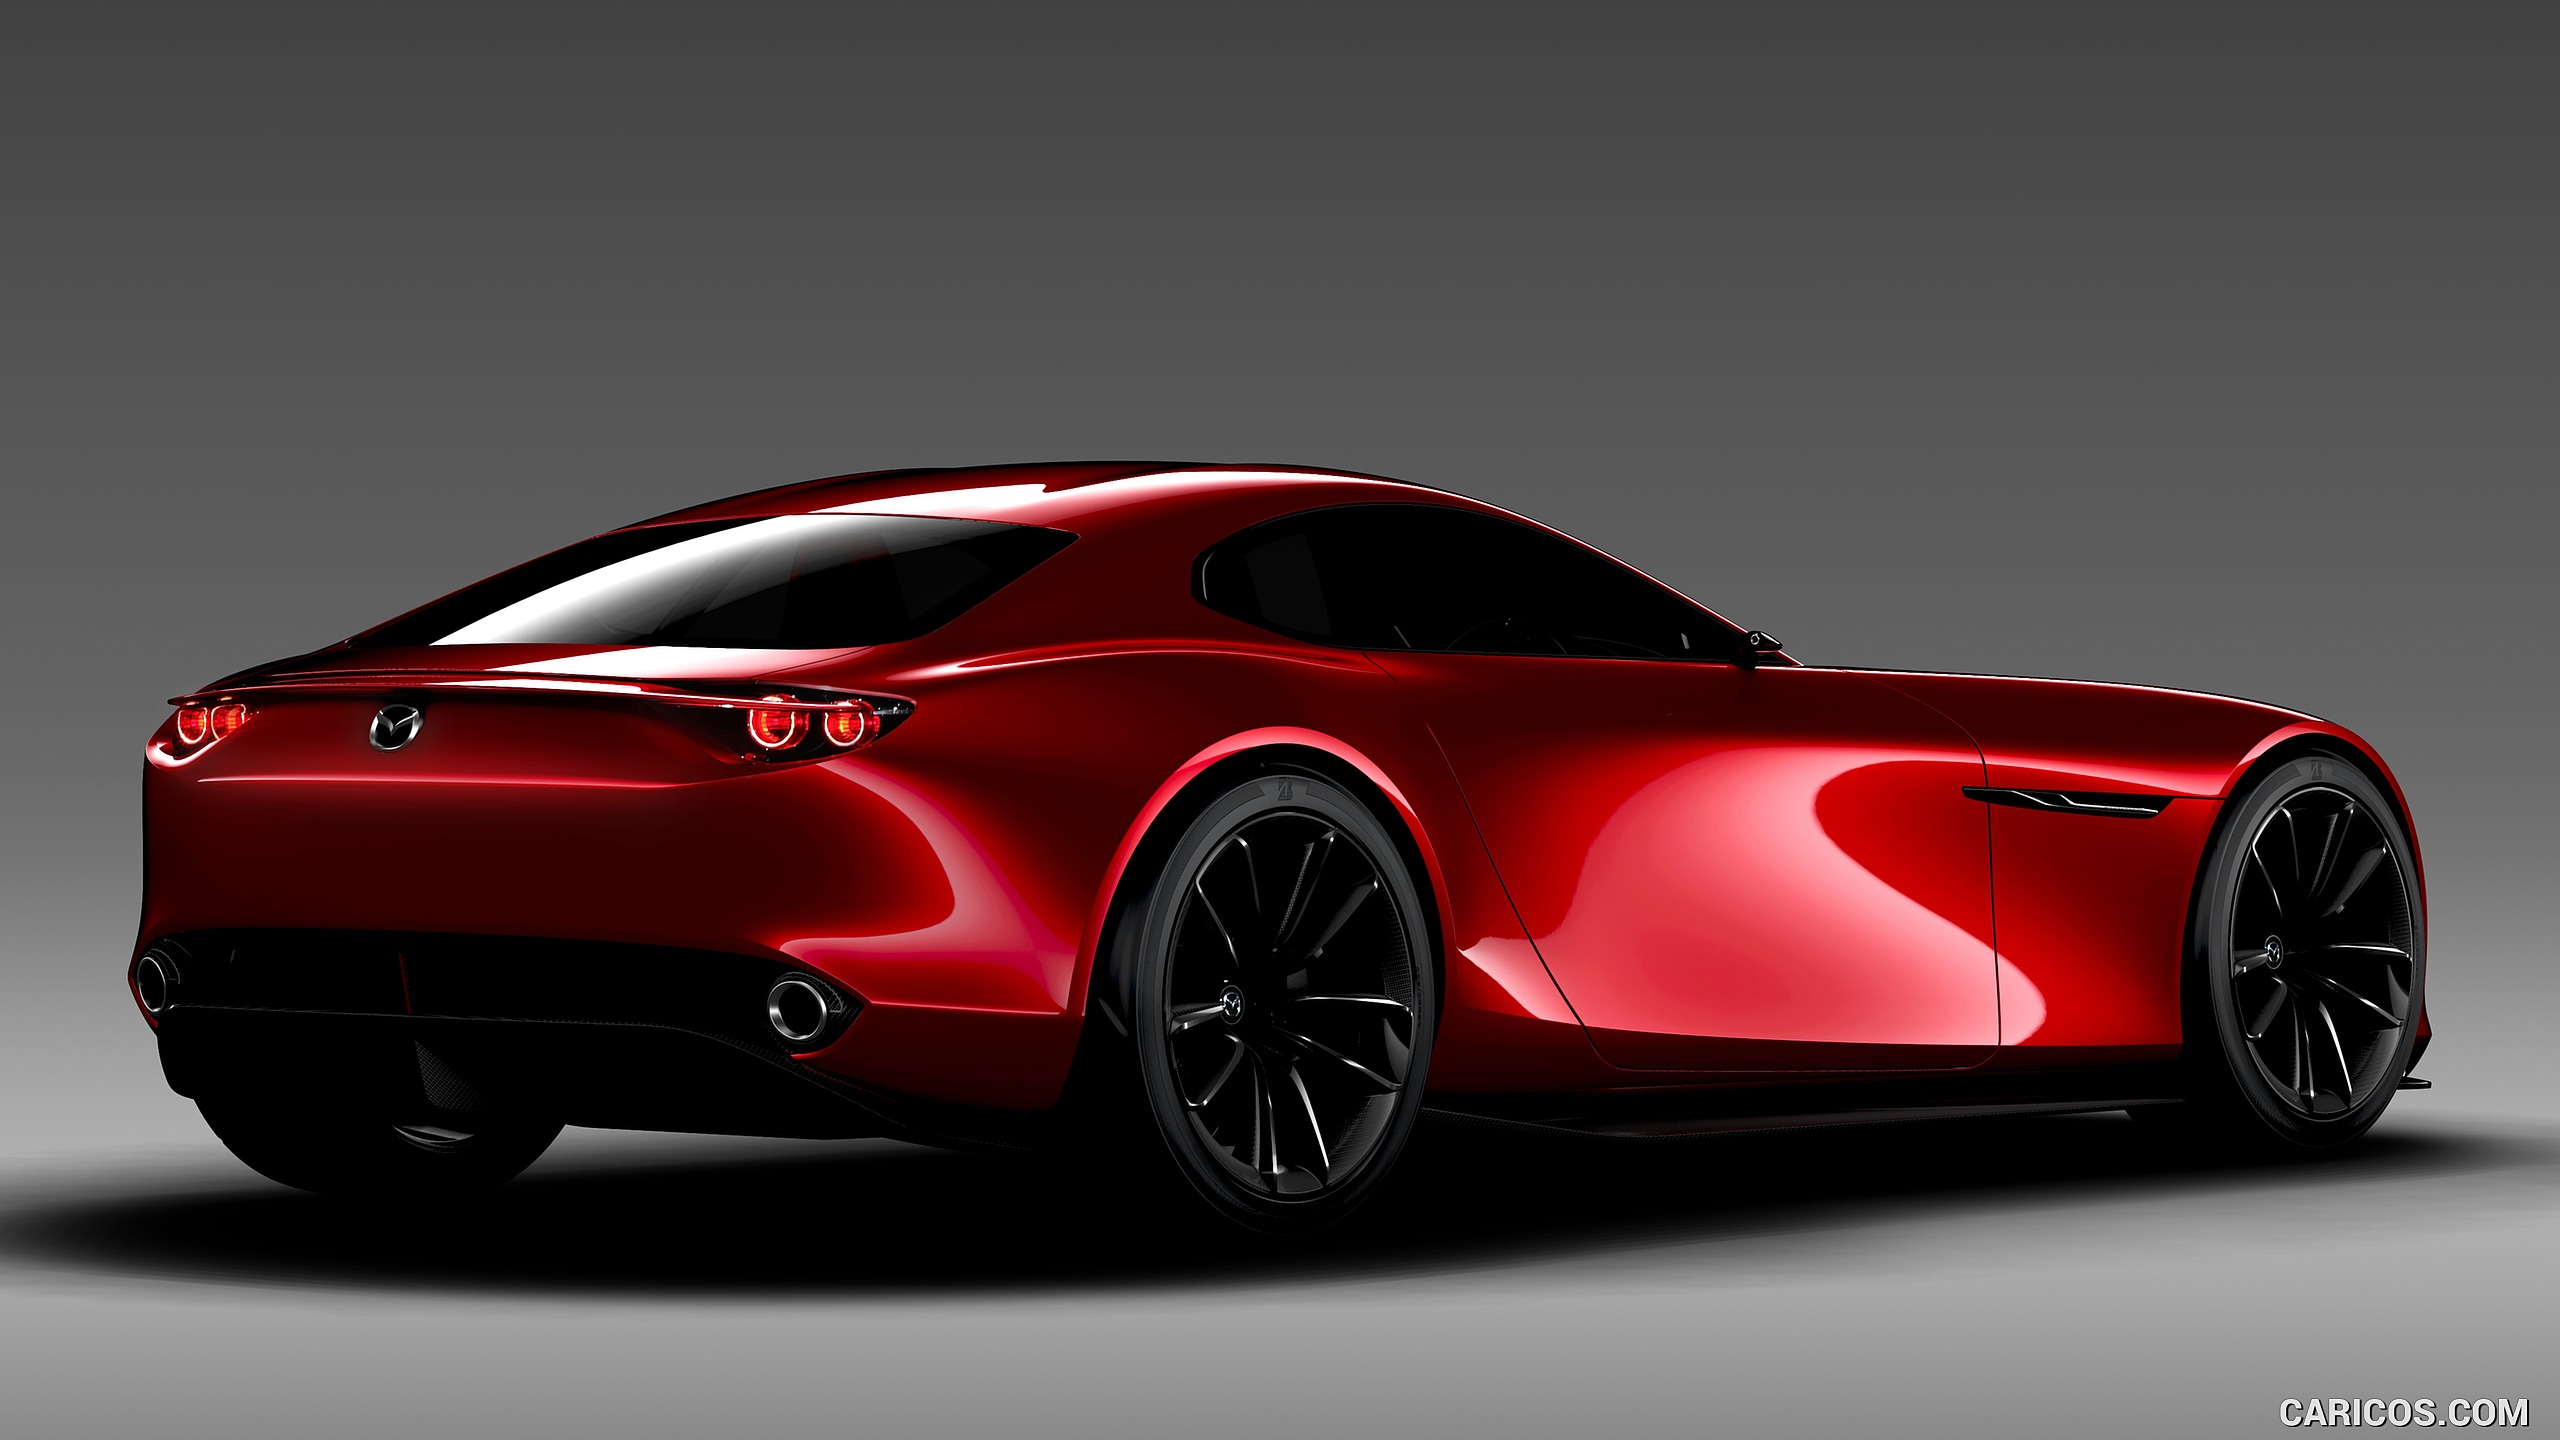 2015 Mazda RX-VISION Concept - Rear, #12 of 16